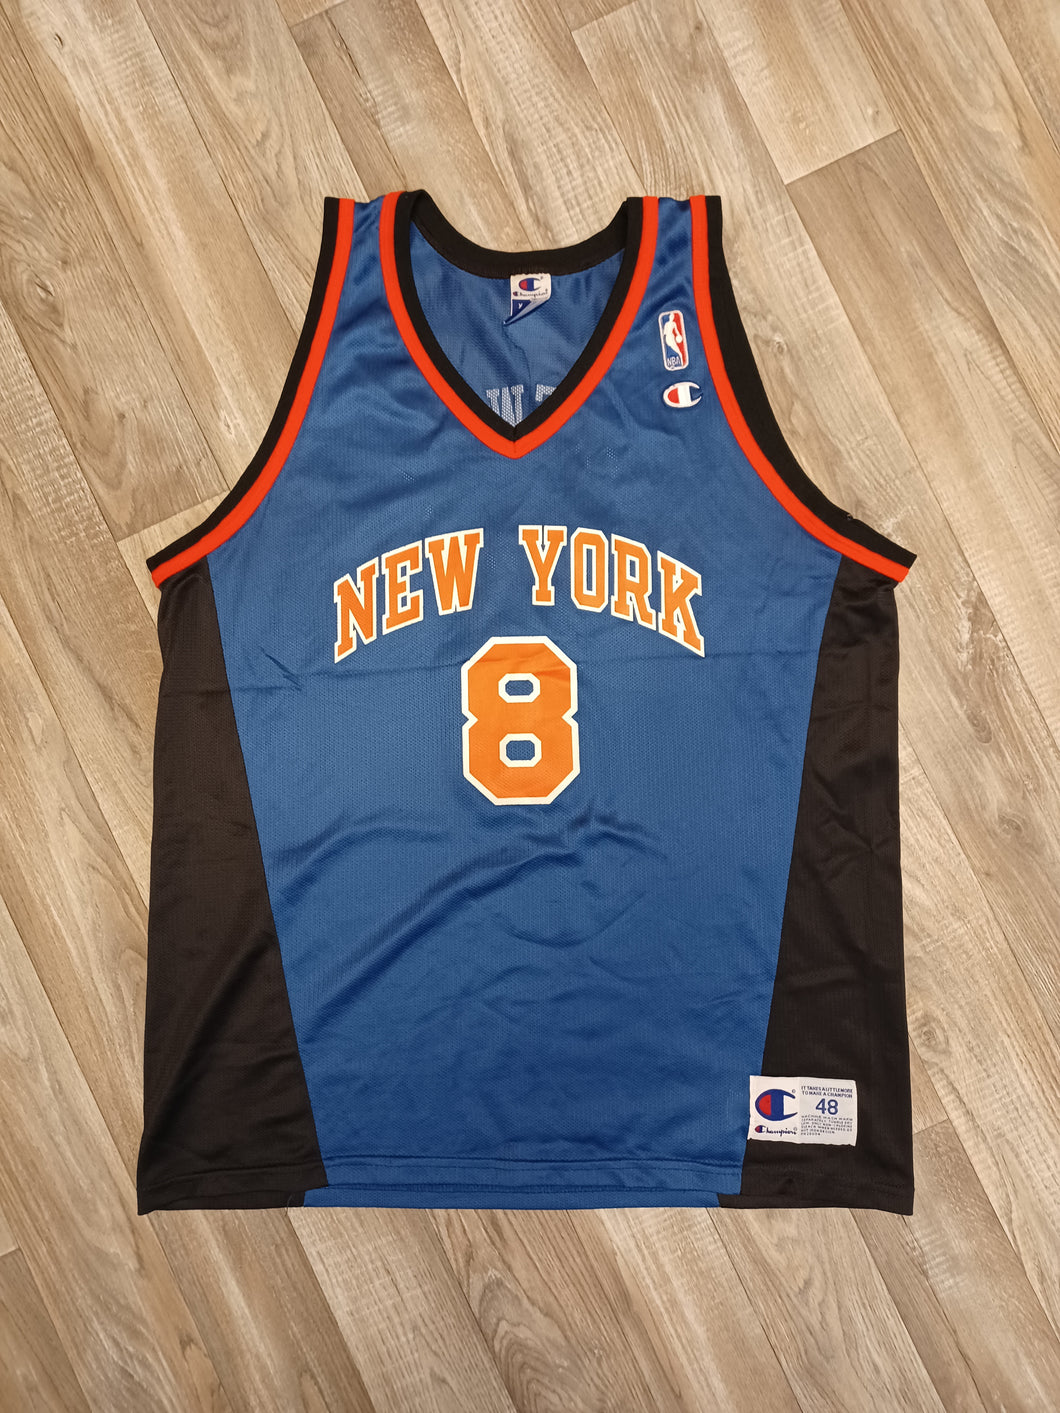 Latrell Sprewell New York Knicks Jersey Size XL